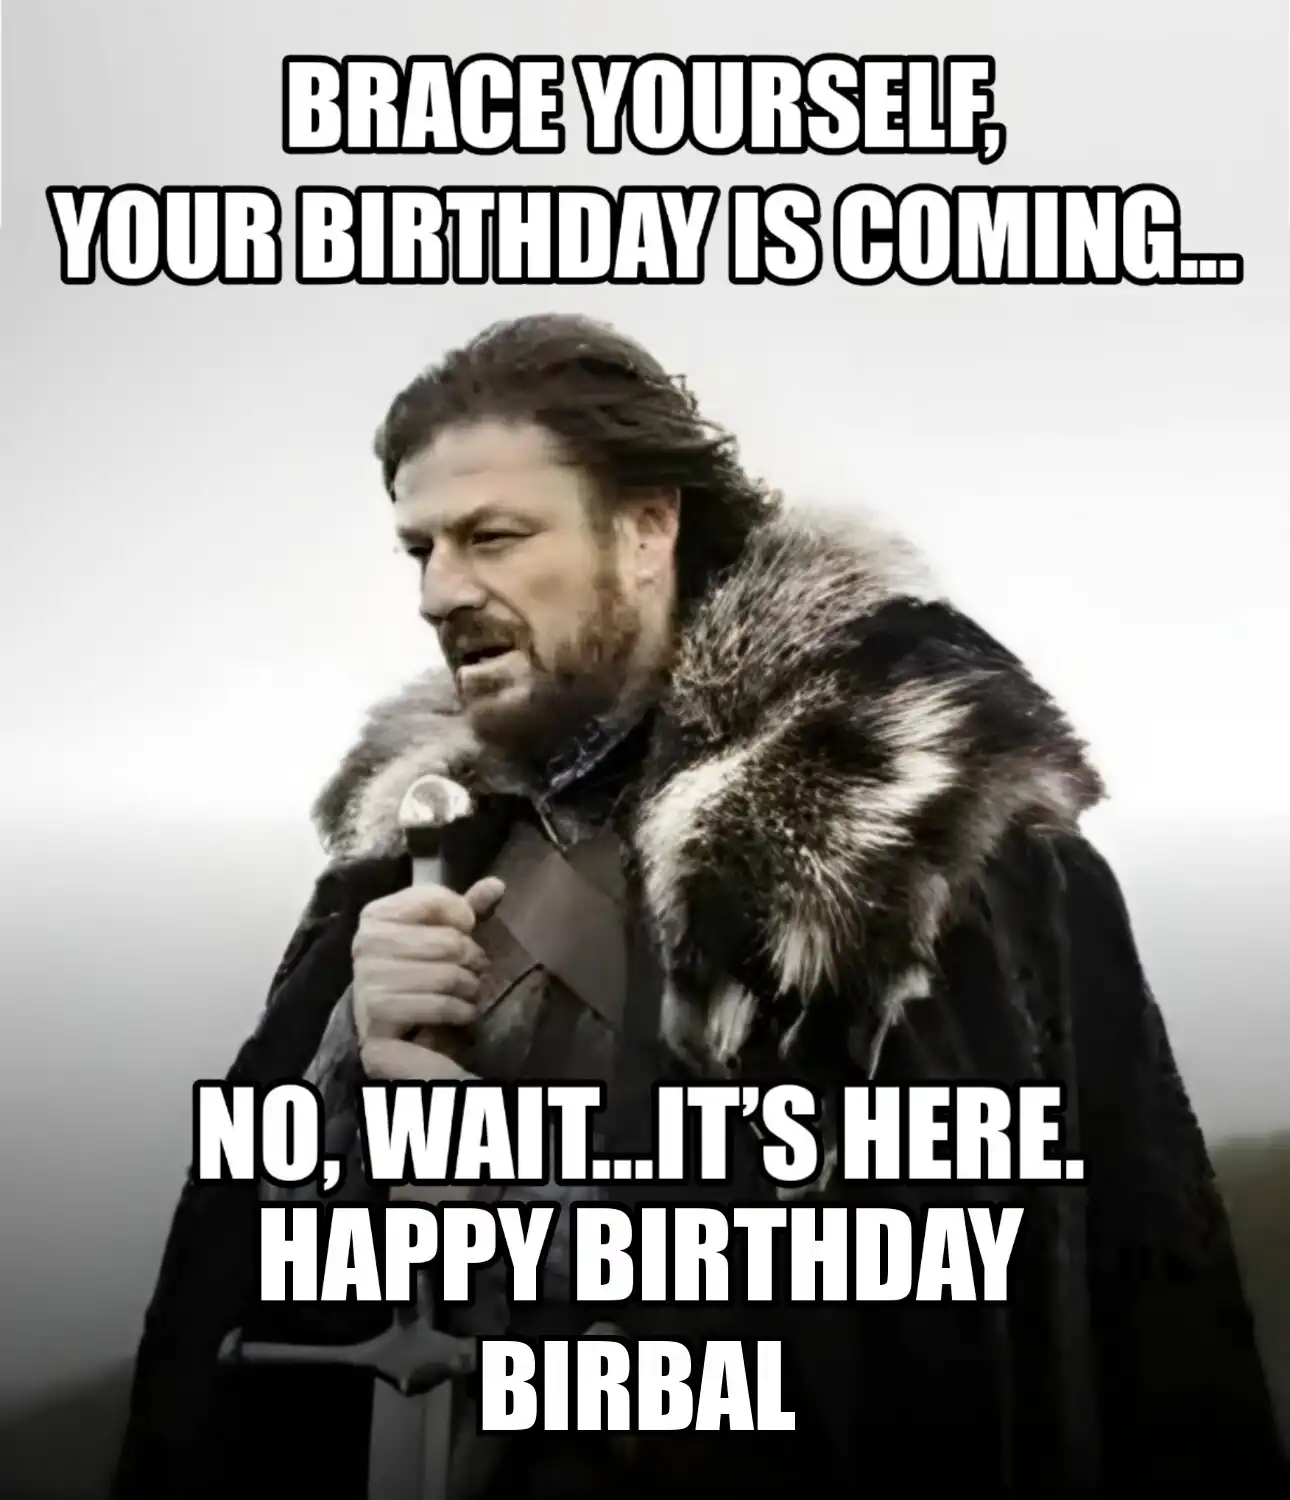 Happy Birthday Birbal Brace Yourself Your Birthday Is Coming Meme